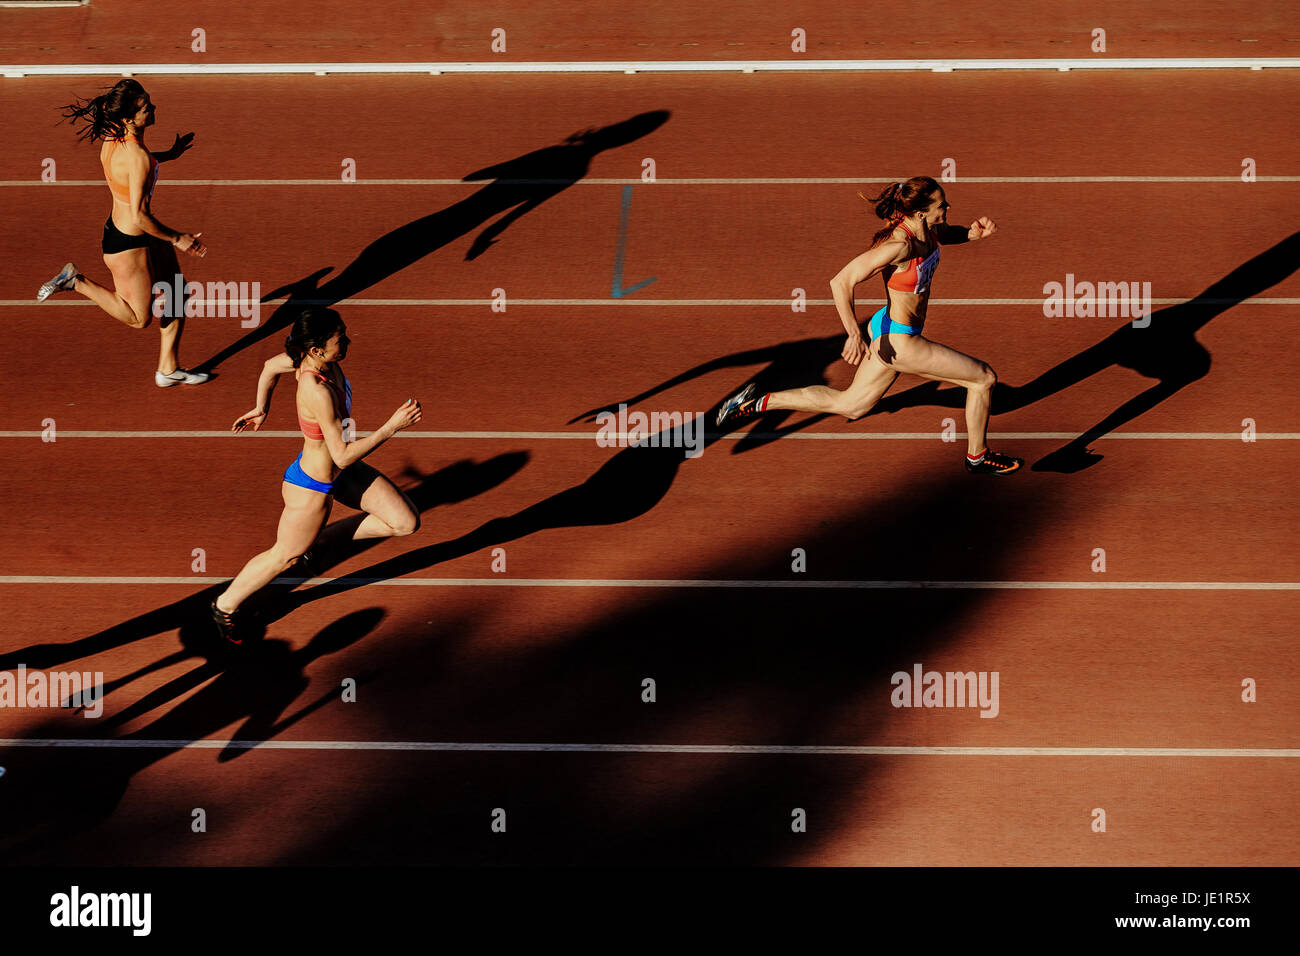 three women runners shadows running sprint race during UrFO Championship in athletics Stock Photo